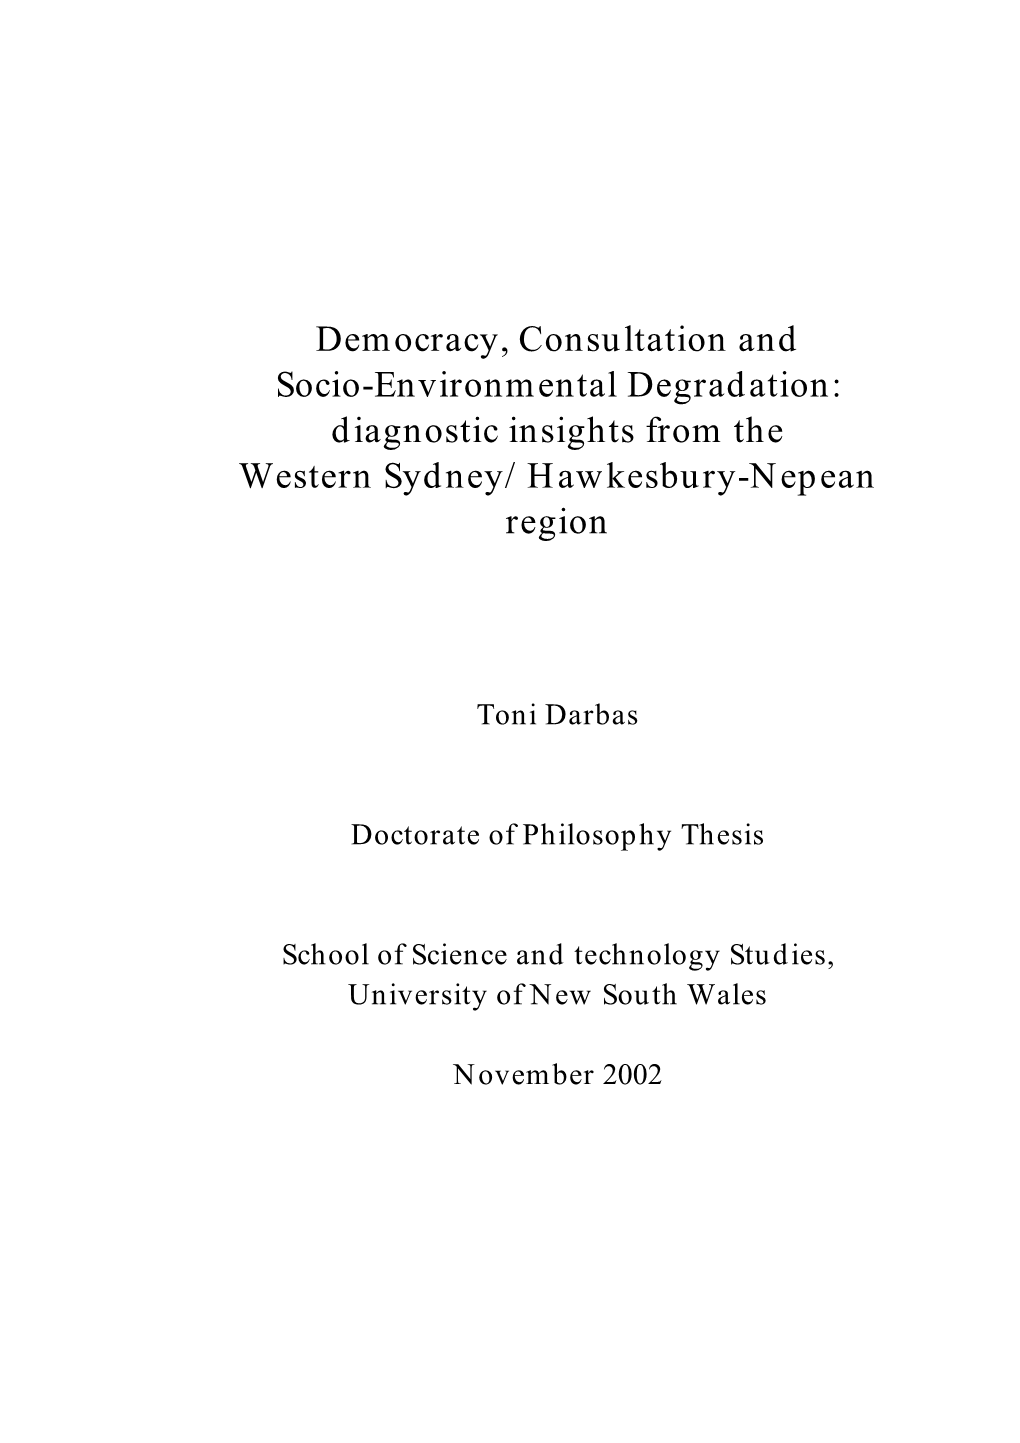 Democracy, Consultation and Socio-Environmental Degradation: Diagnostic Insights from the Western Sydney/Hawkesbury-Nepean Region